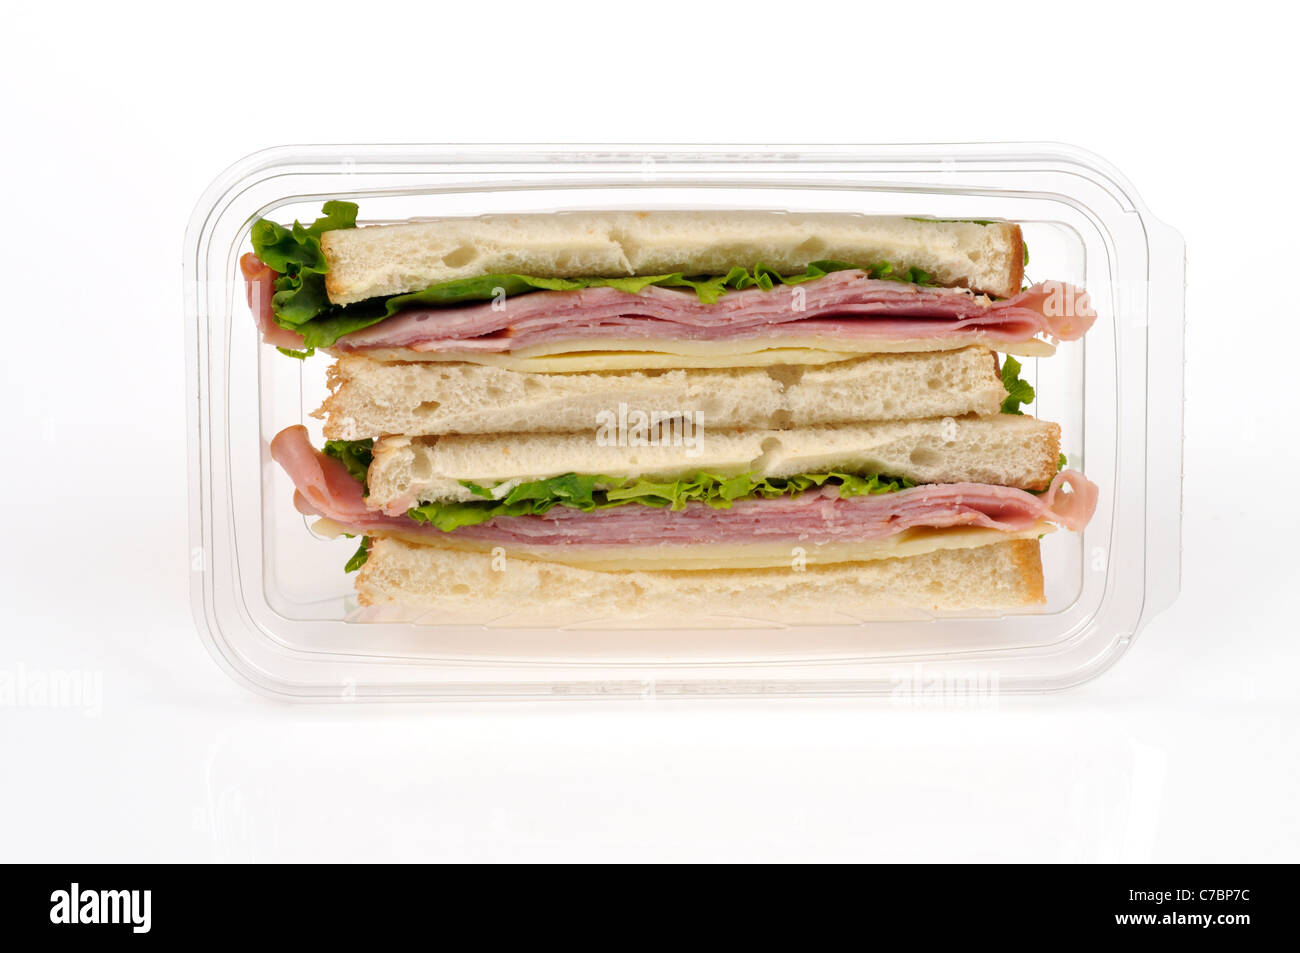 https://c8.alamy.com/comp/C7BP7C/ham-salad-with-cheese-takeaway-sandwich-on-white-bread-in-plastic-C7BP7C.jpg